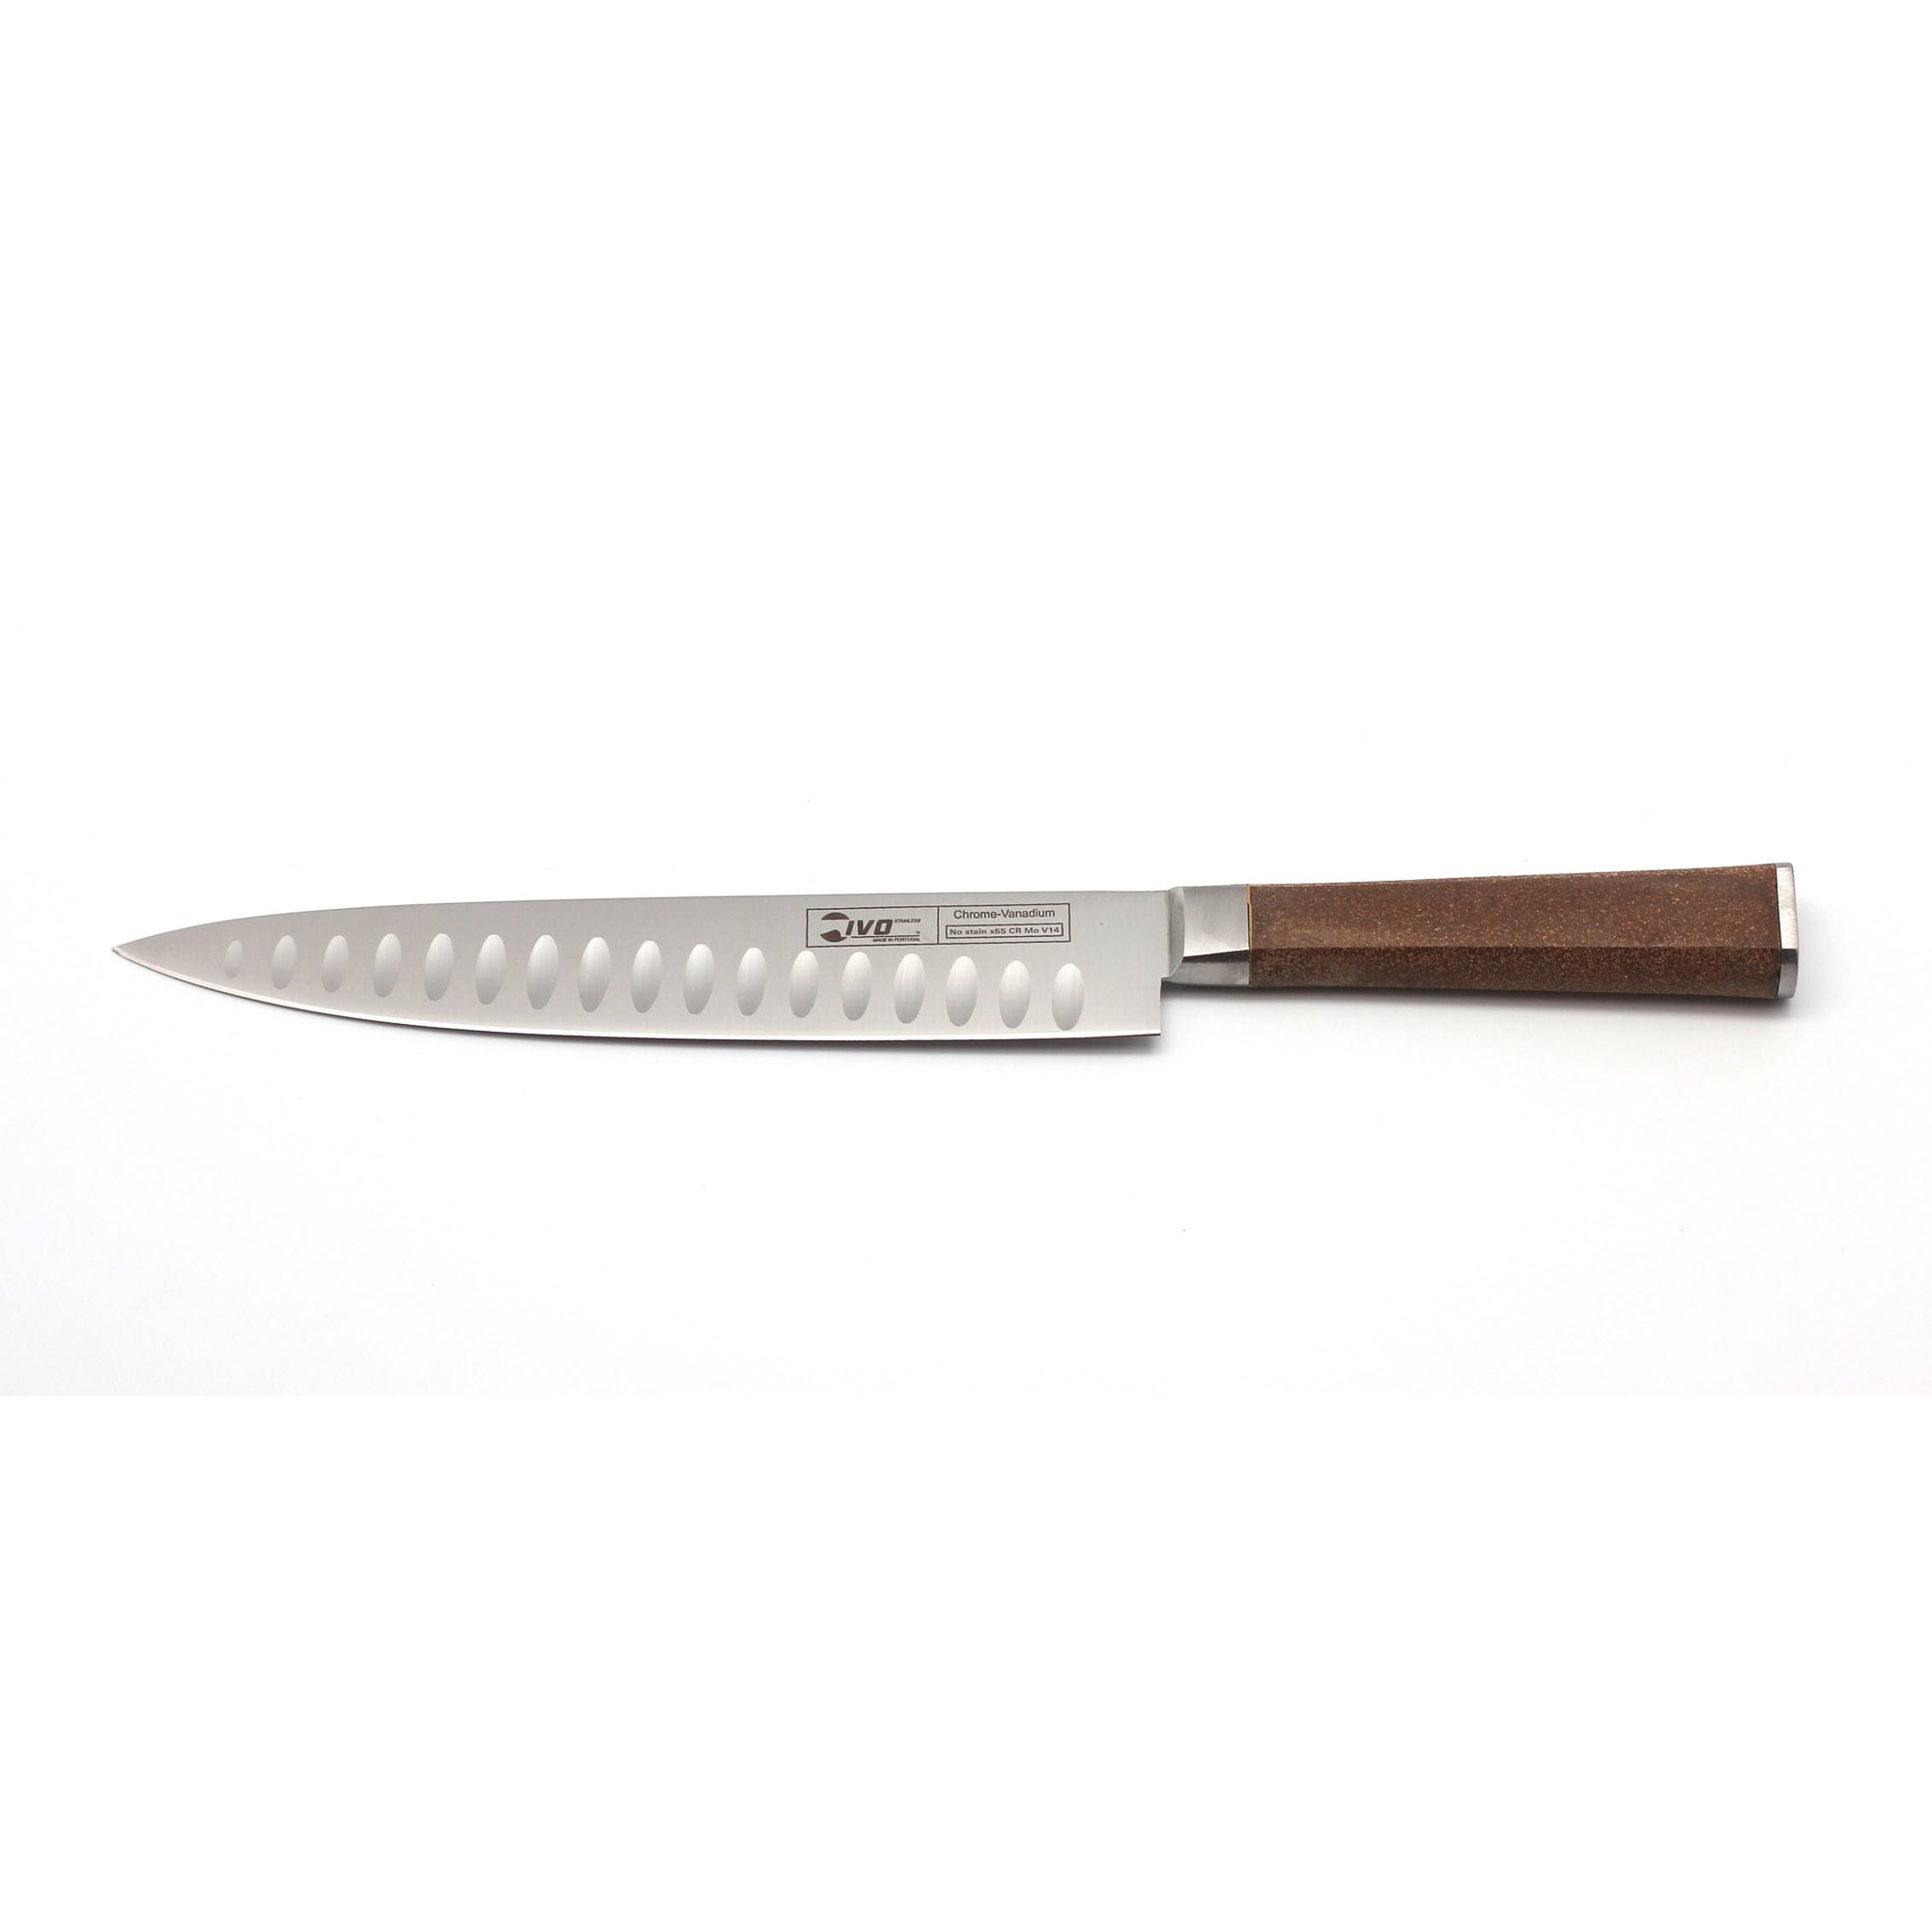 Нож для резки с канавками 20см Ivo нож для хлеба 20см virtu black ivo